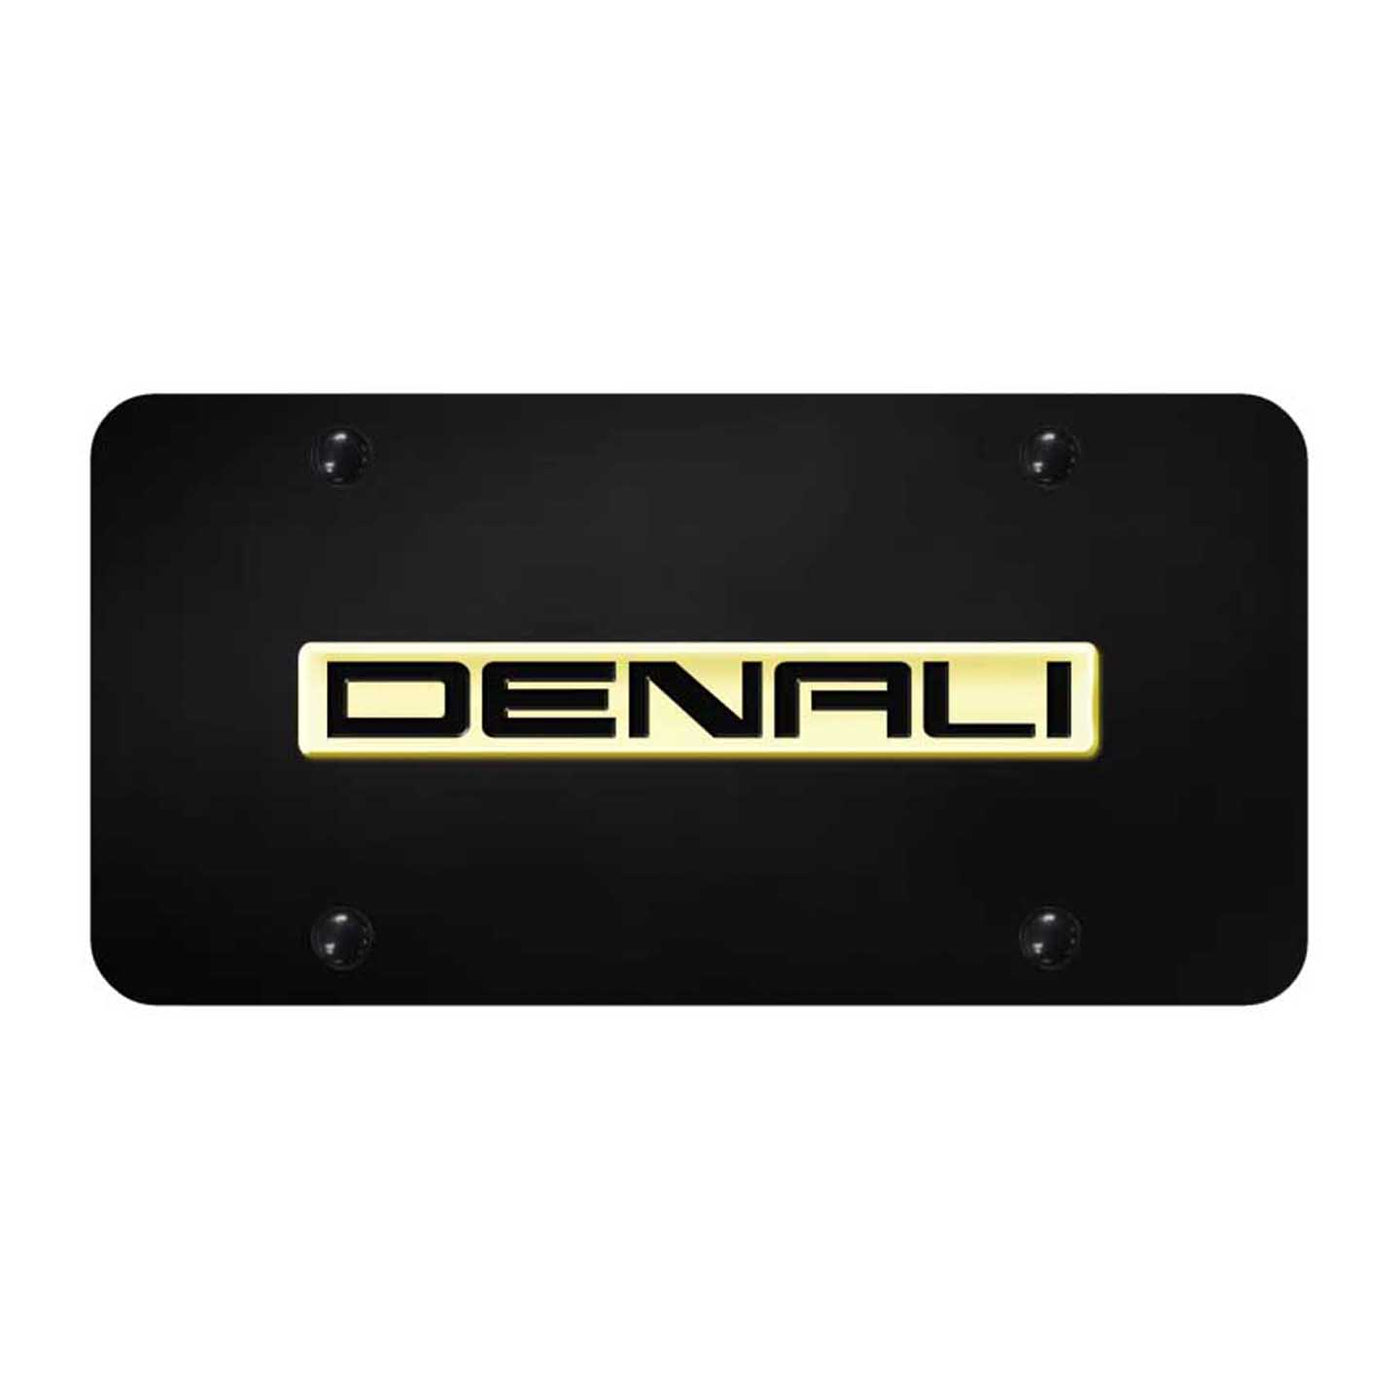 Denali Name License Plate - Gold on Black